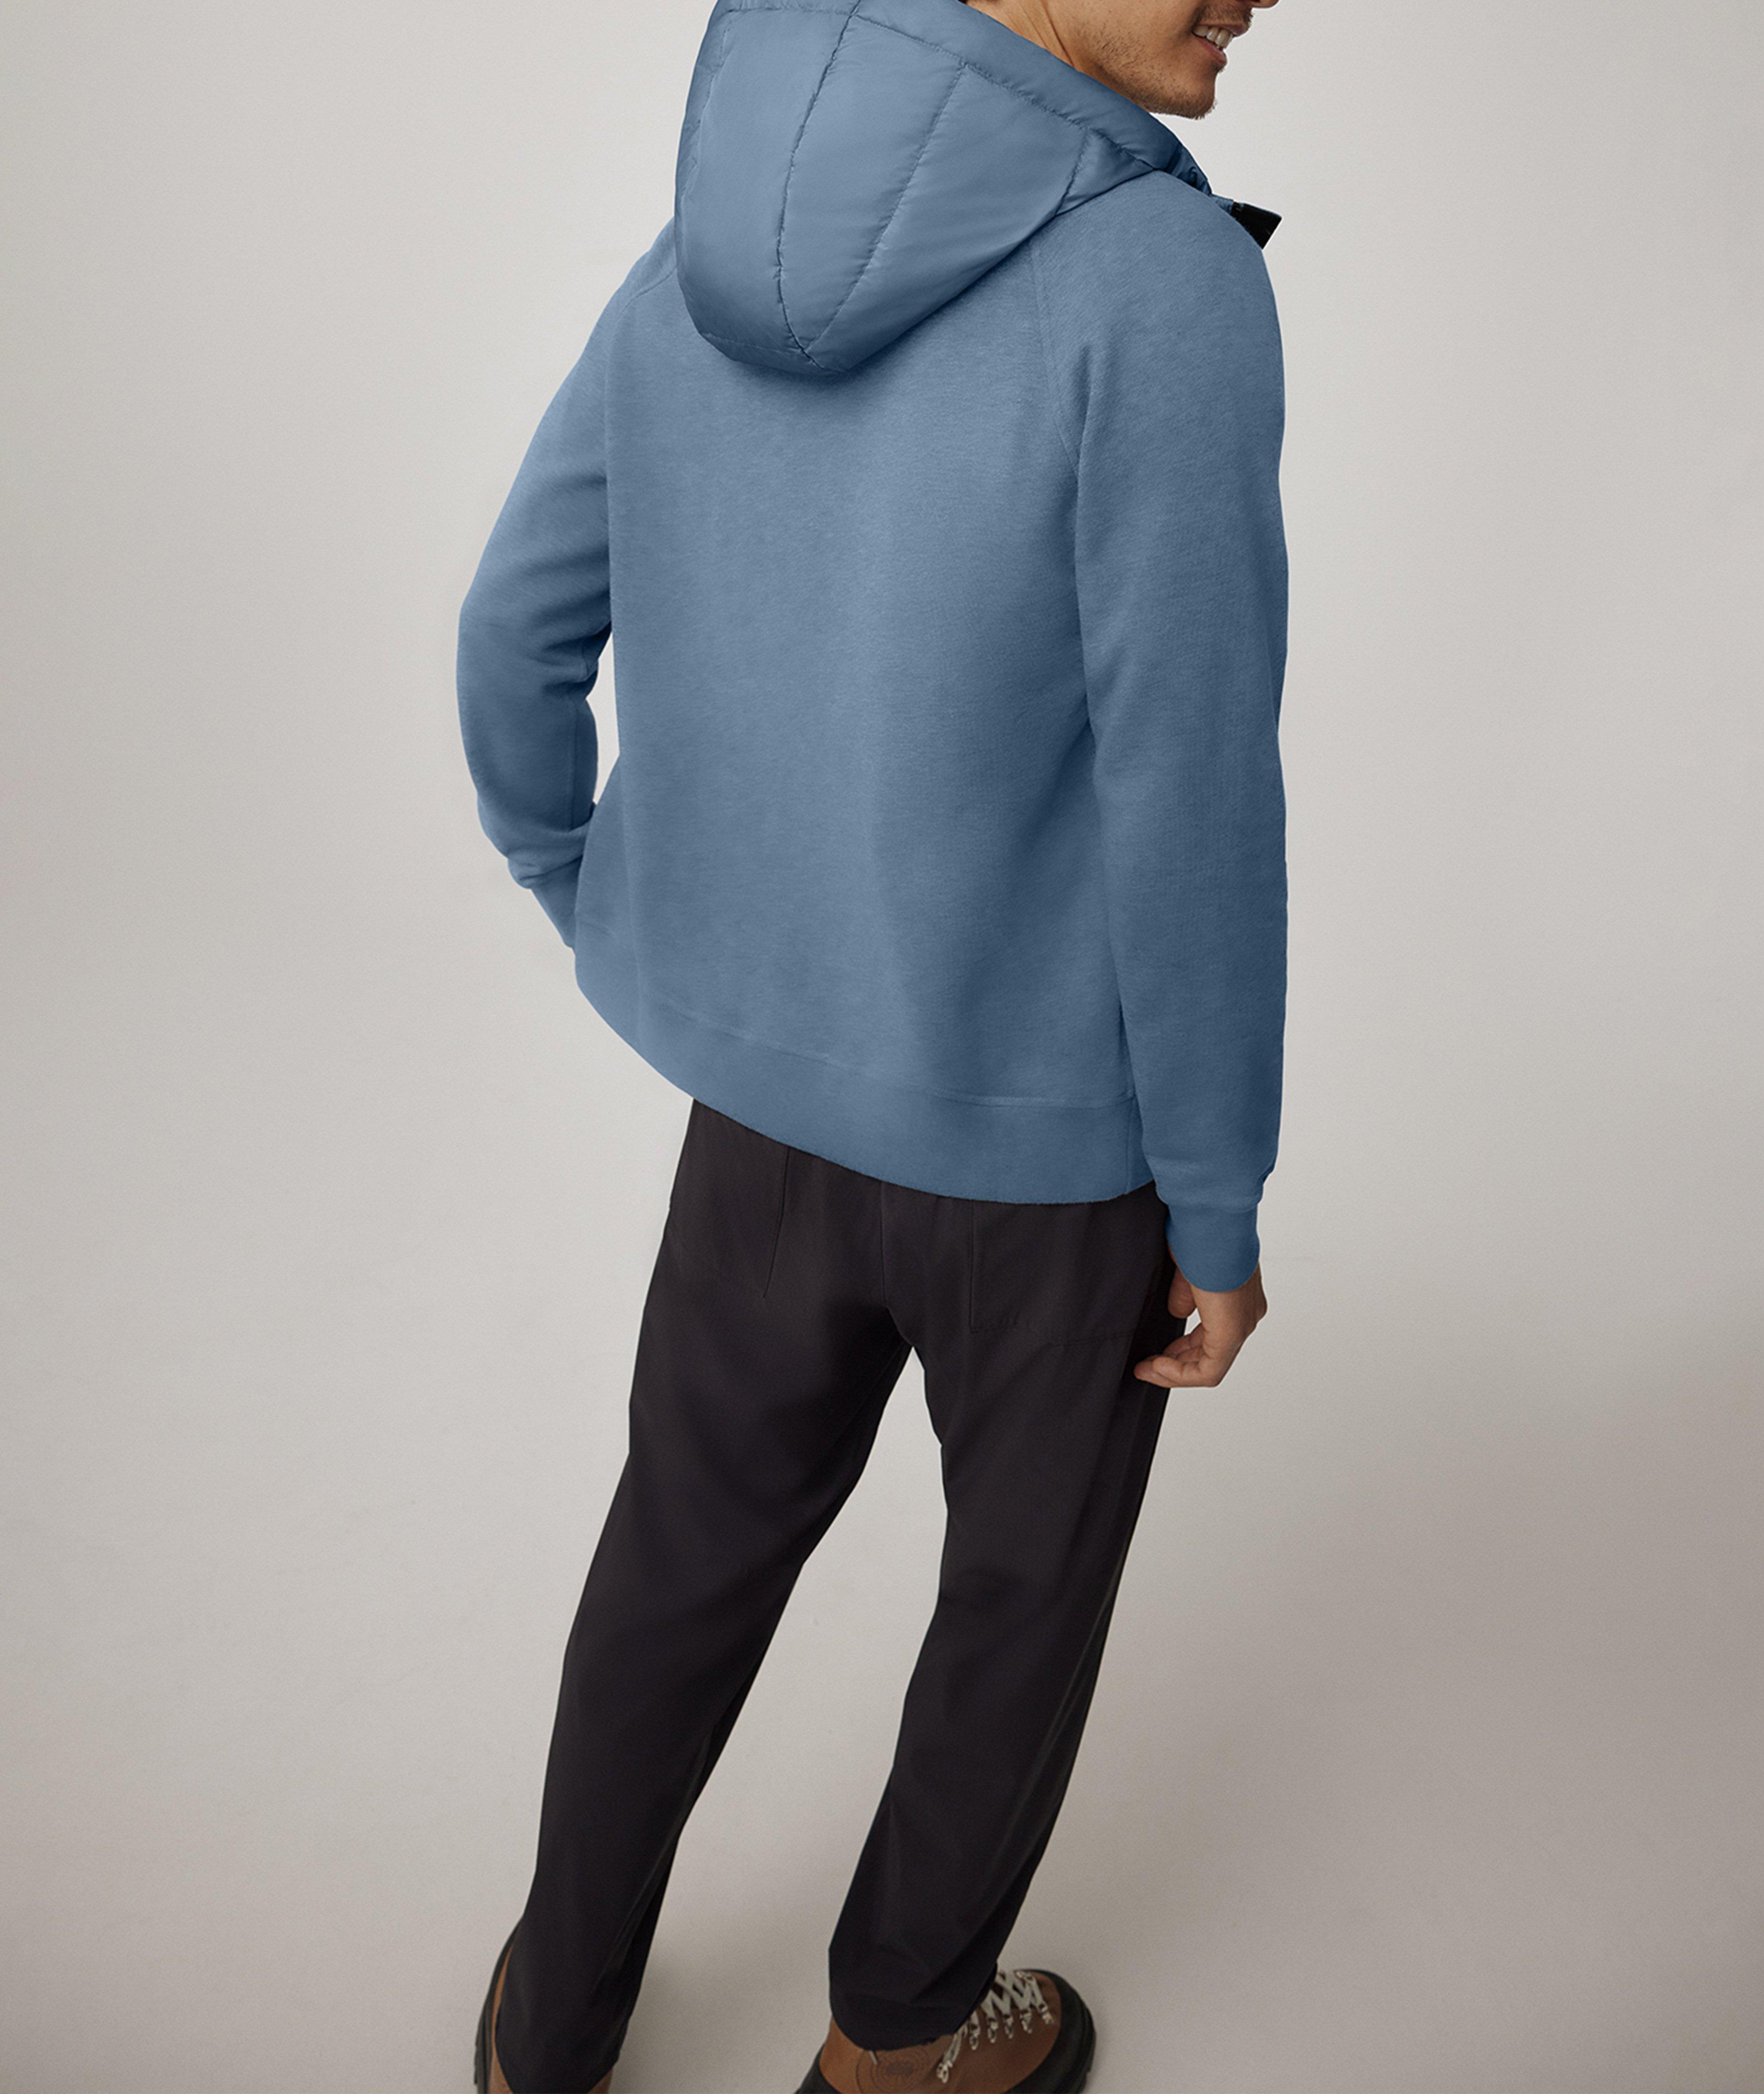 HyBridge Huron Full-Zip Hooded Sweater image 3